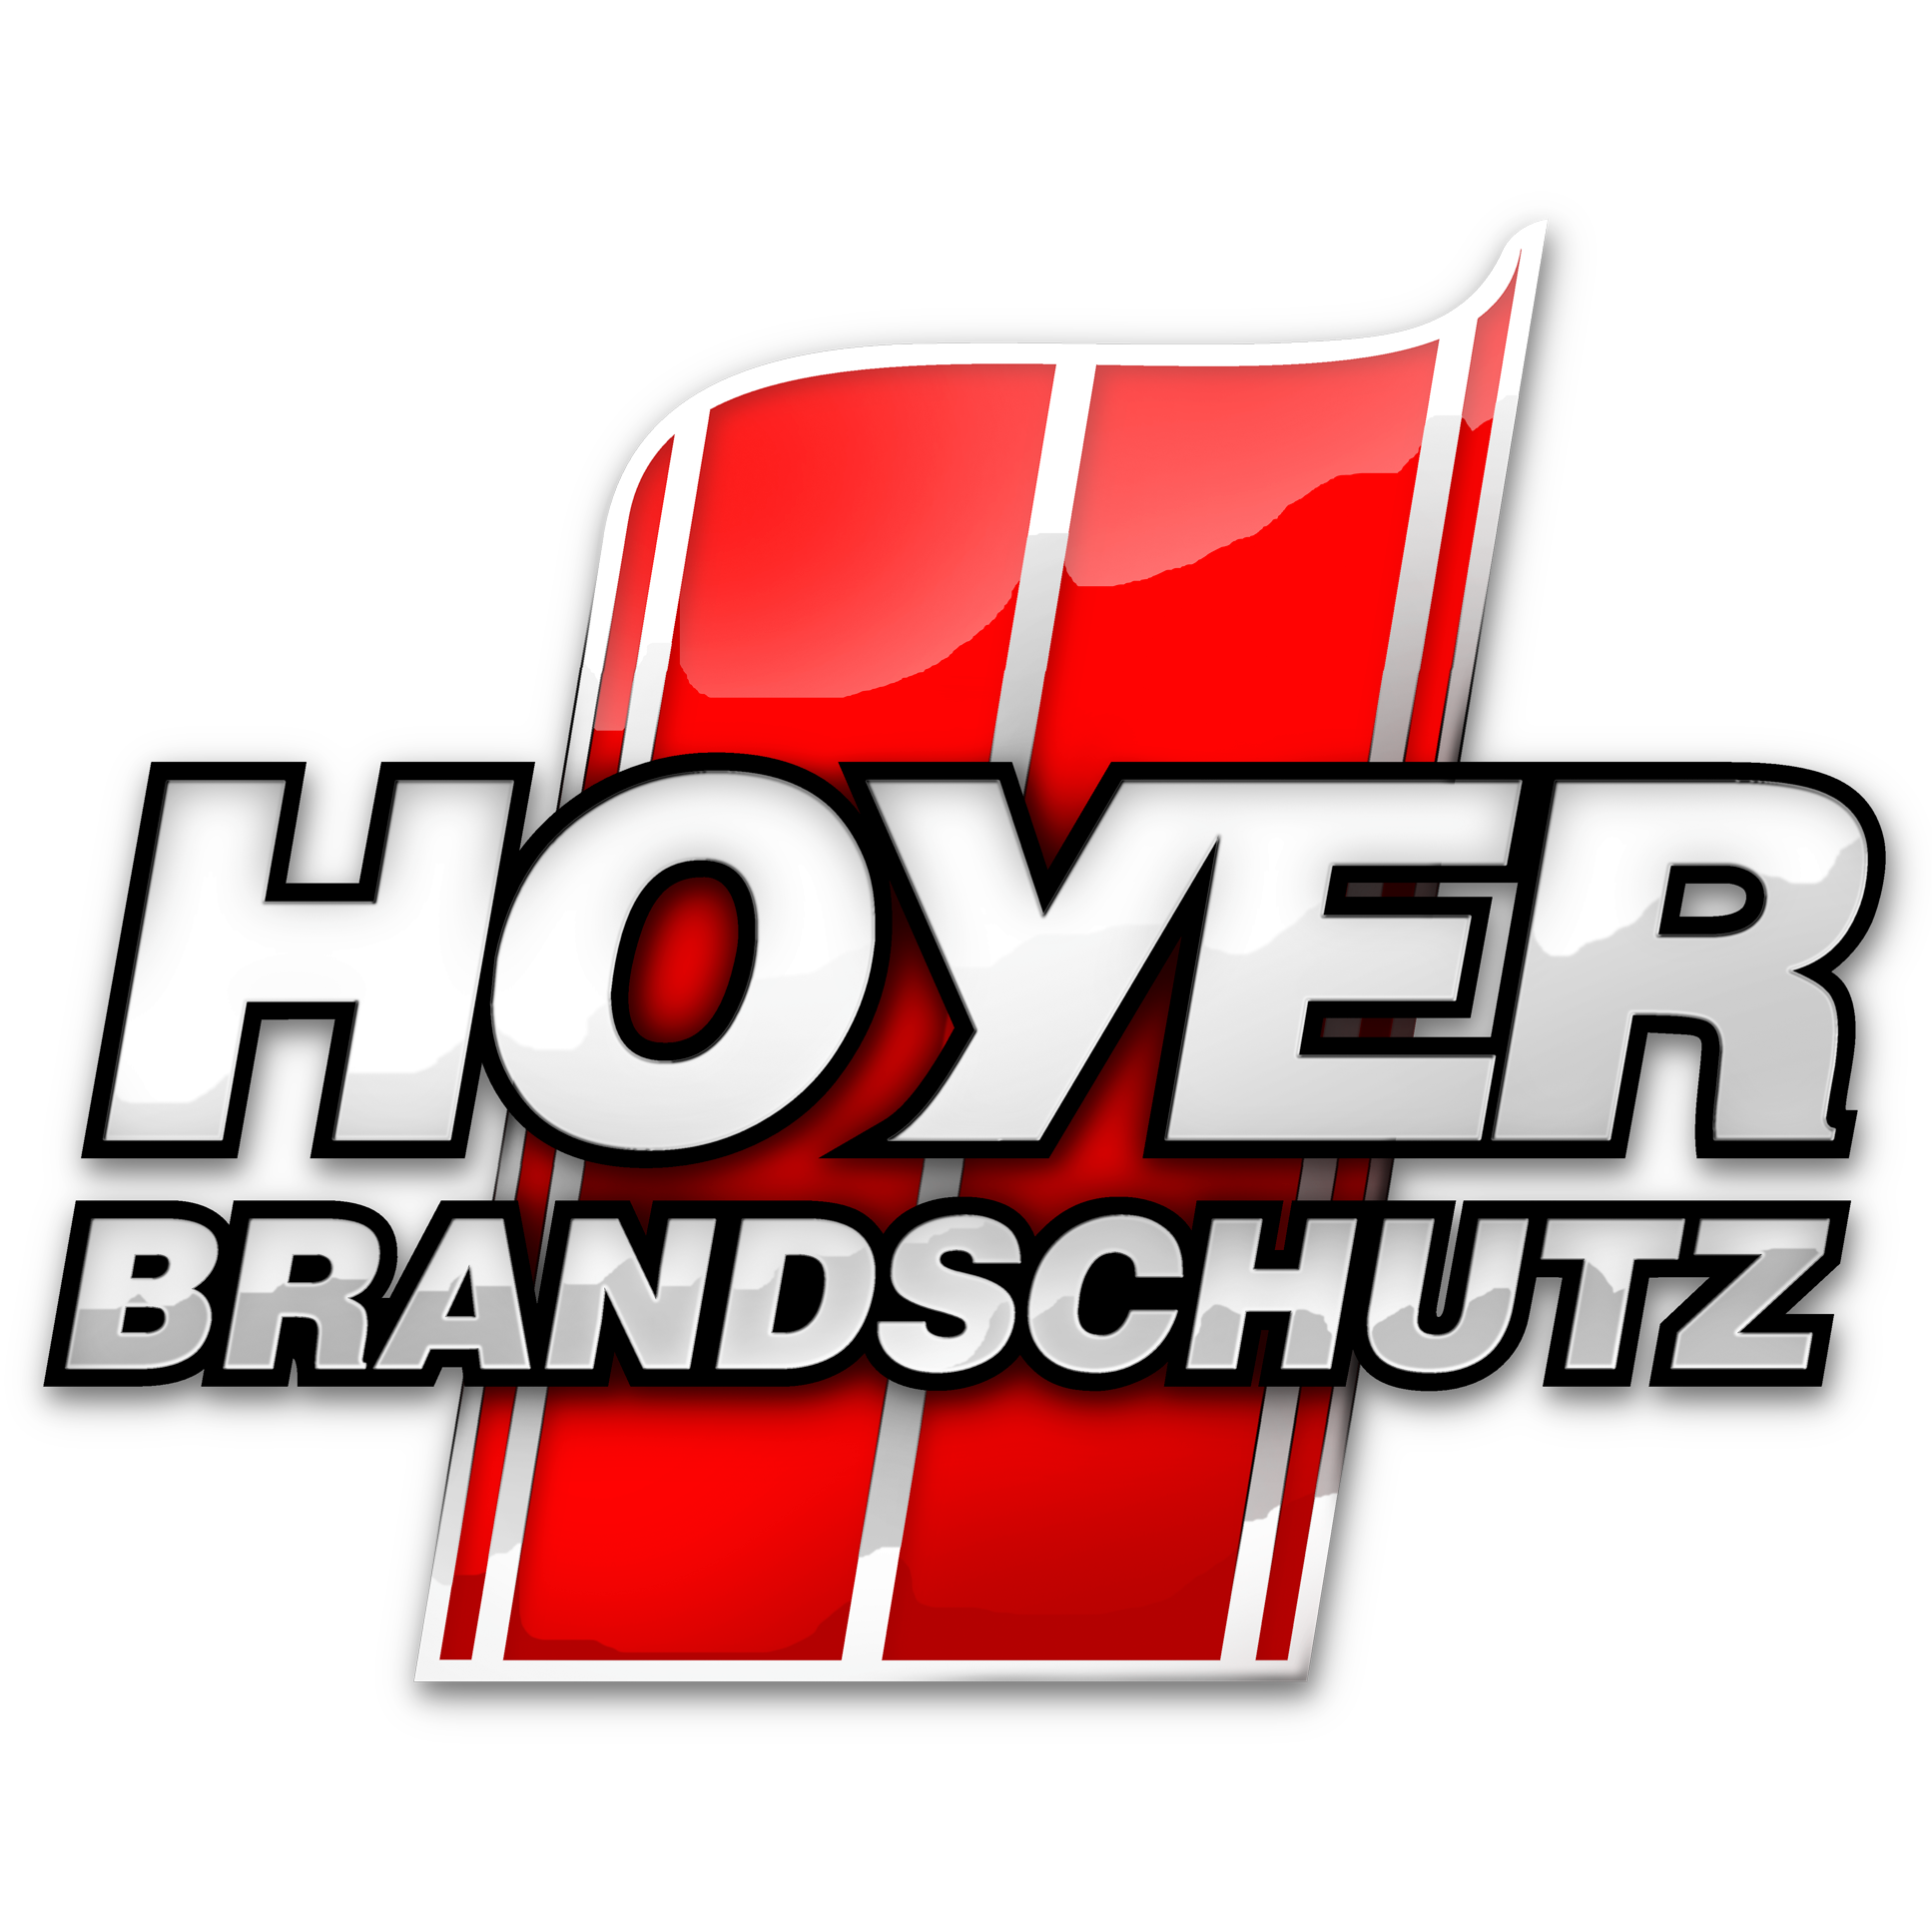 HOYER Brandschutz GmbH - Fire Protection Service - Wien - 01 9822870 Austria | ShowMeLocal.com